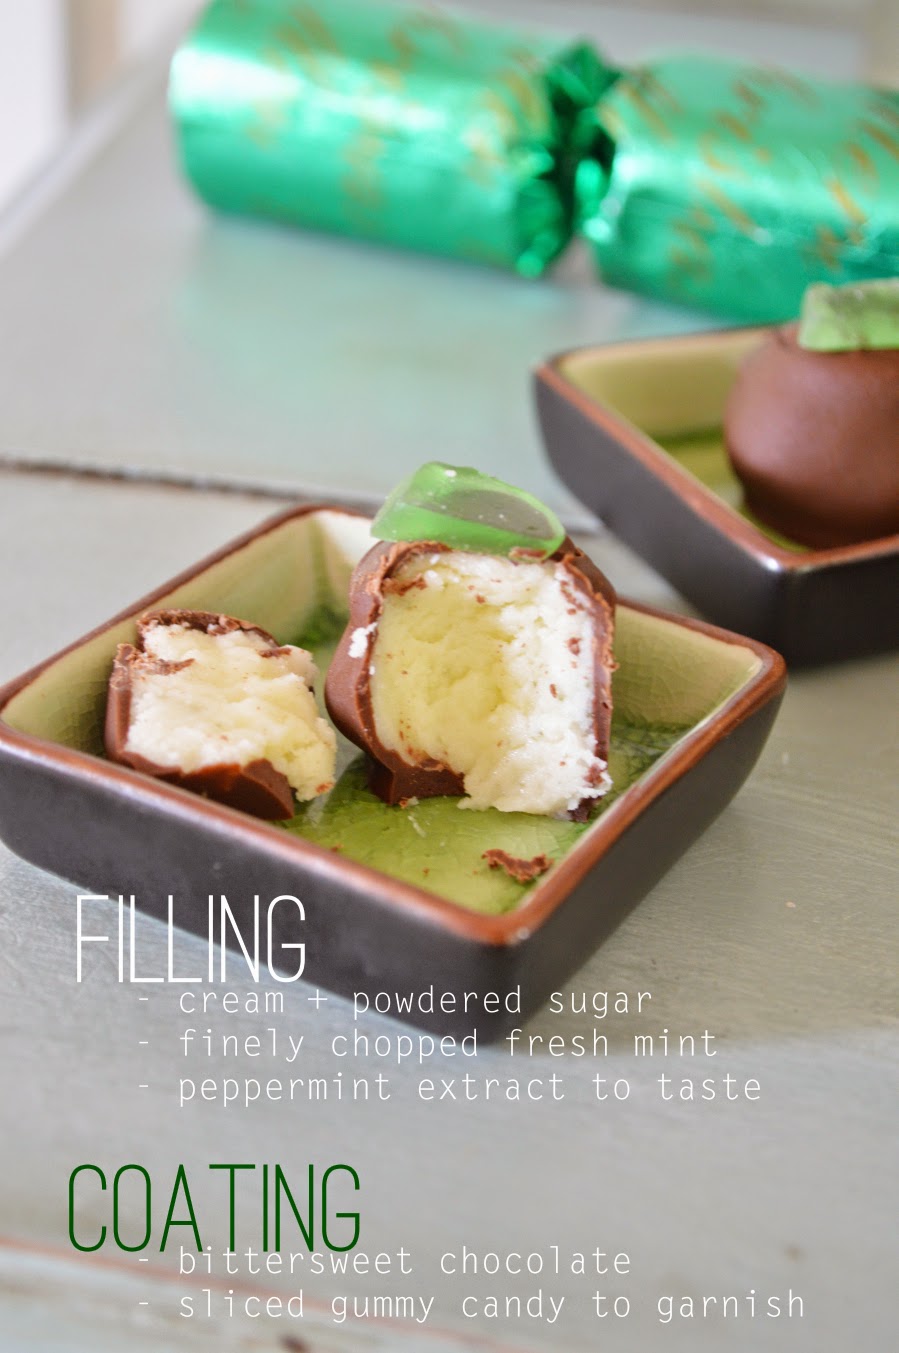 Chocolate truffles 3 ways - recipe. by fivekindsofhappy blog